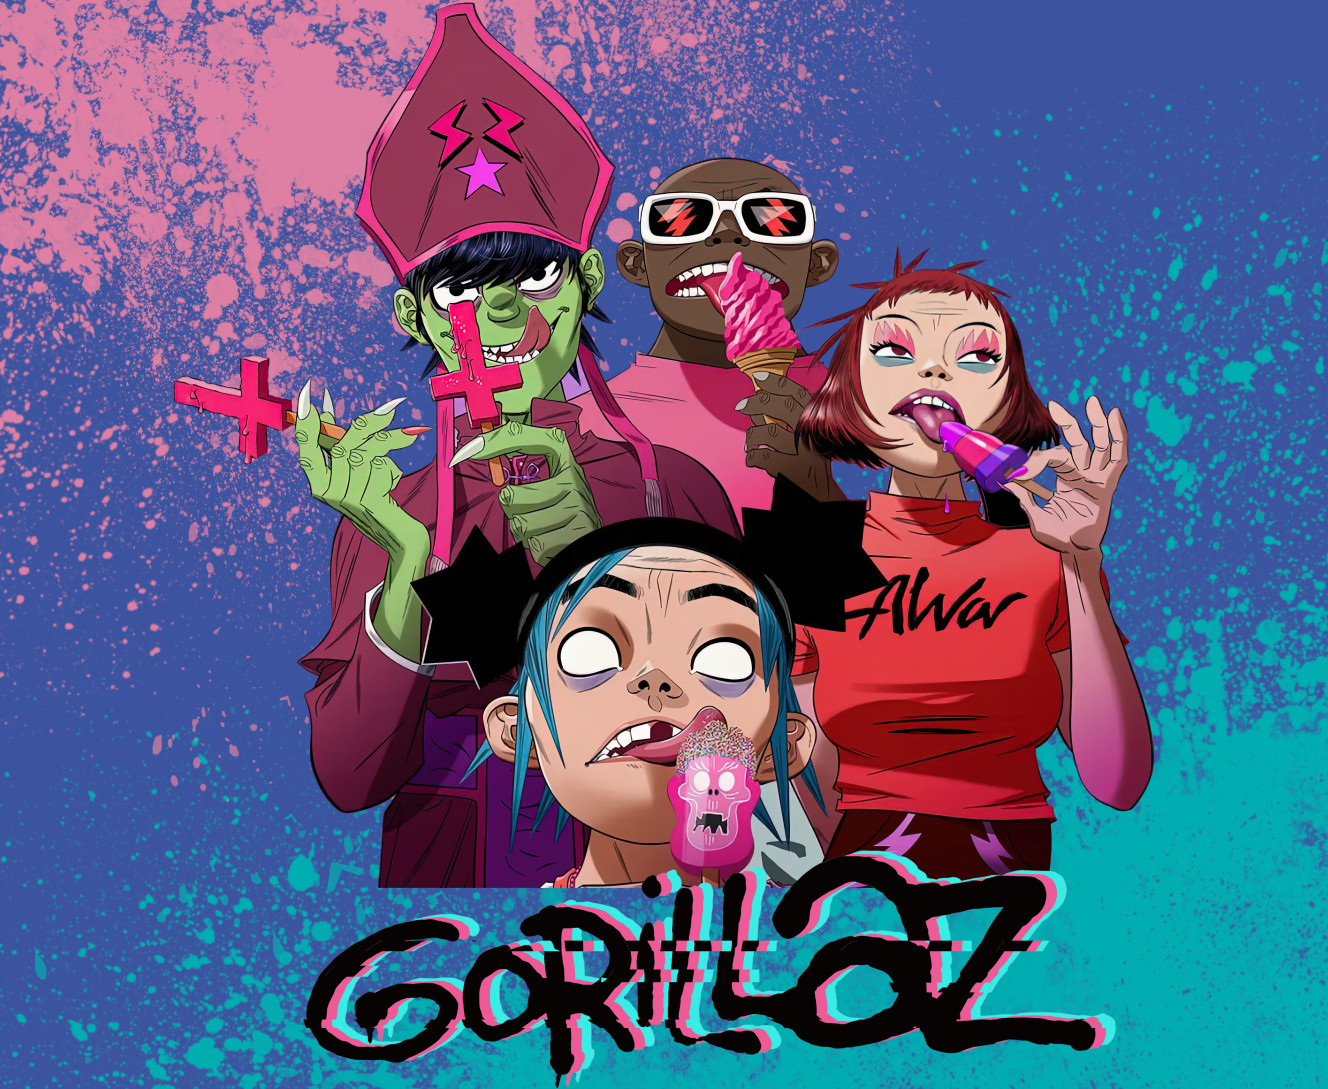 New Gorillaz